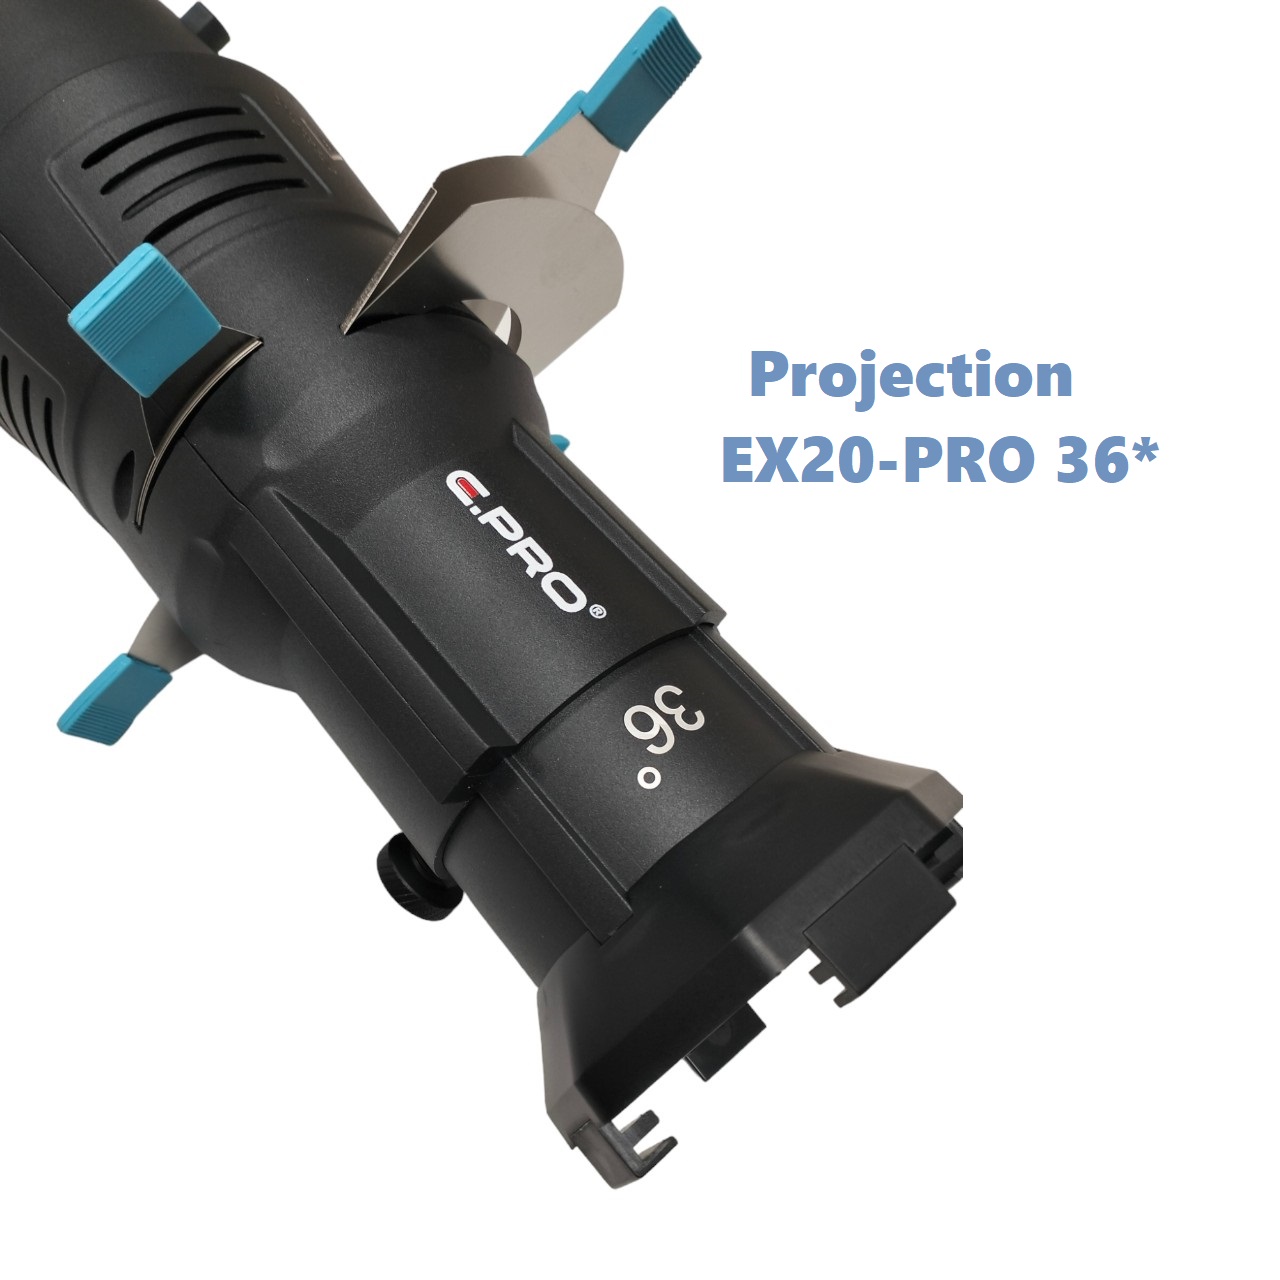  Projection Attachment EX20-PRO 36*